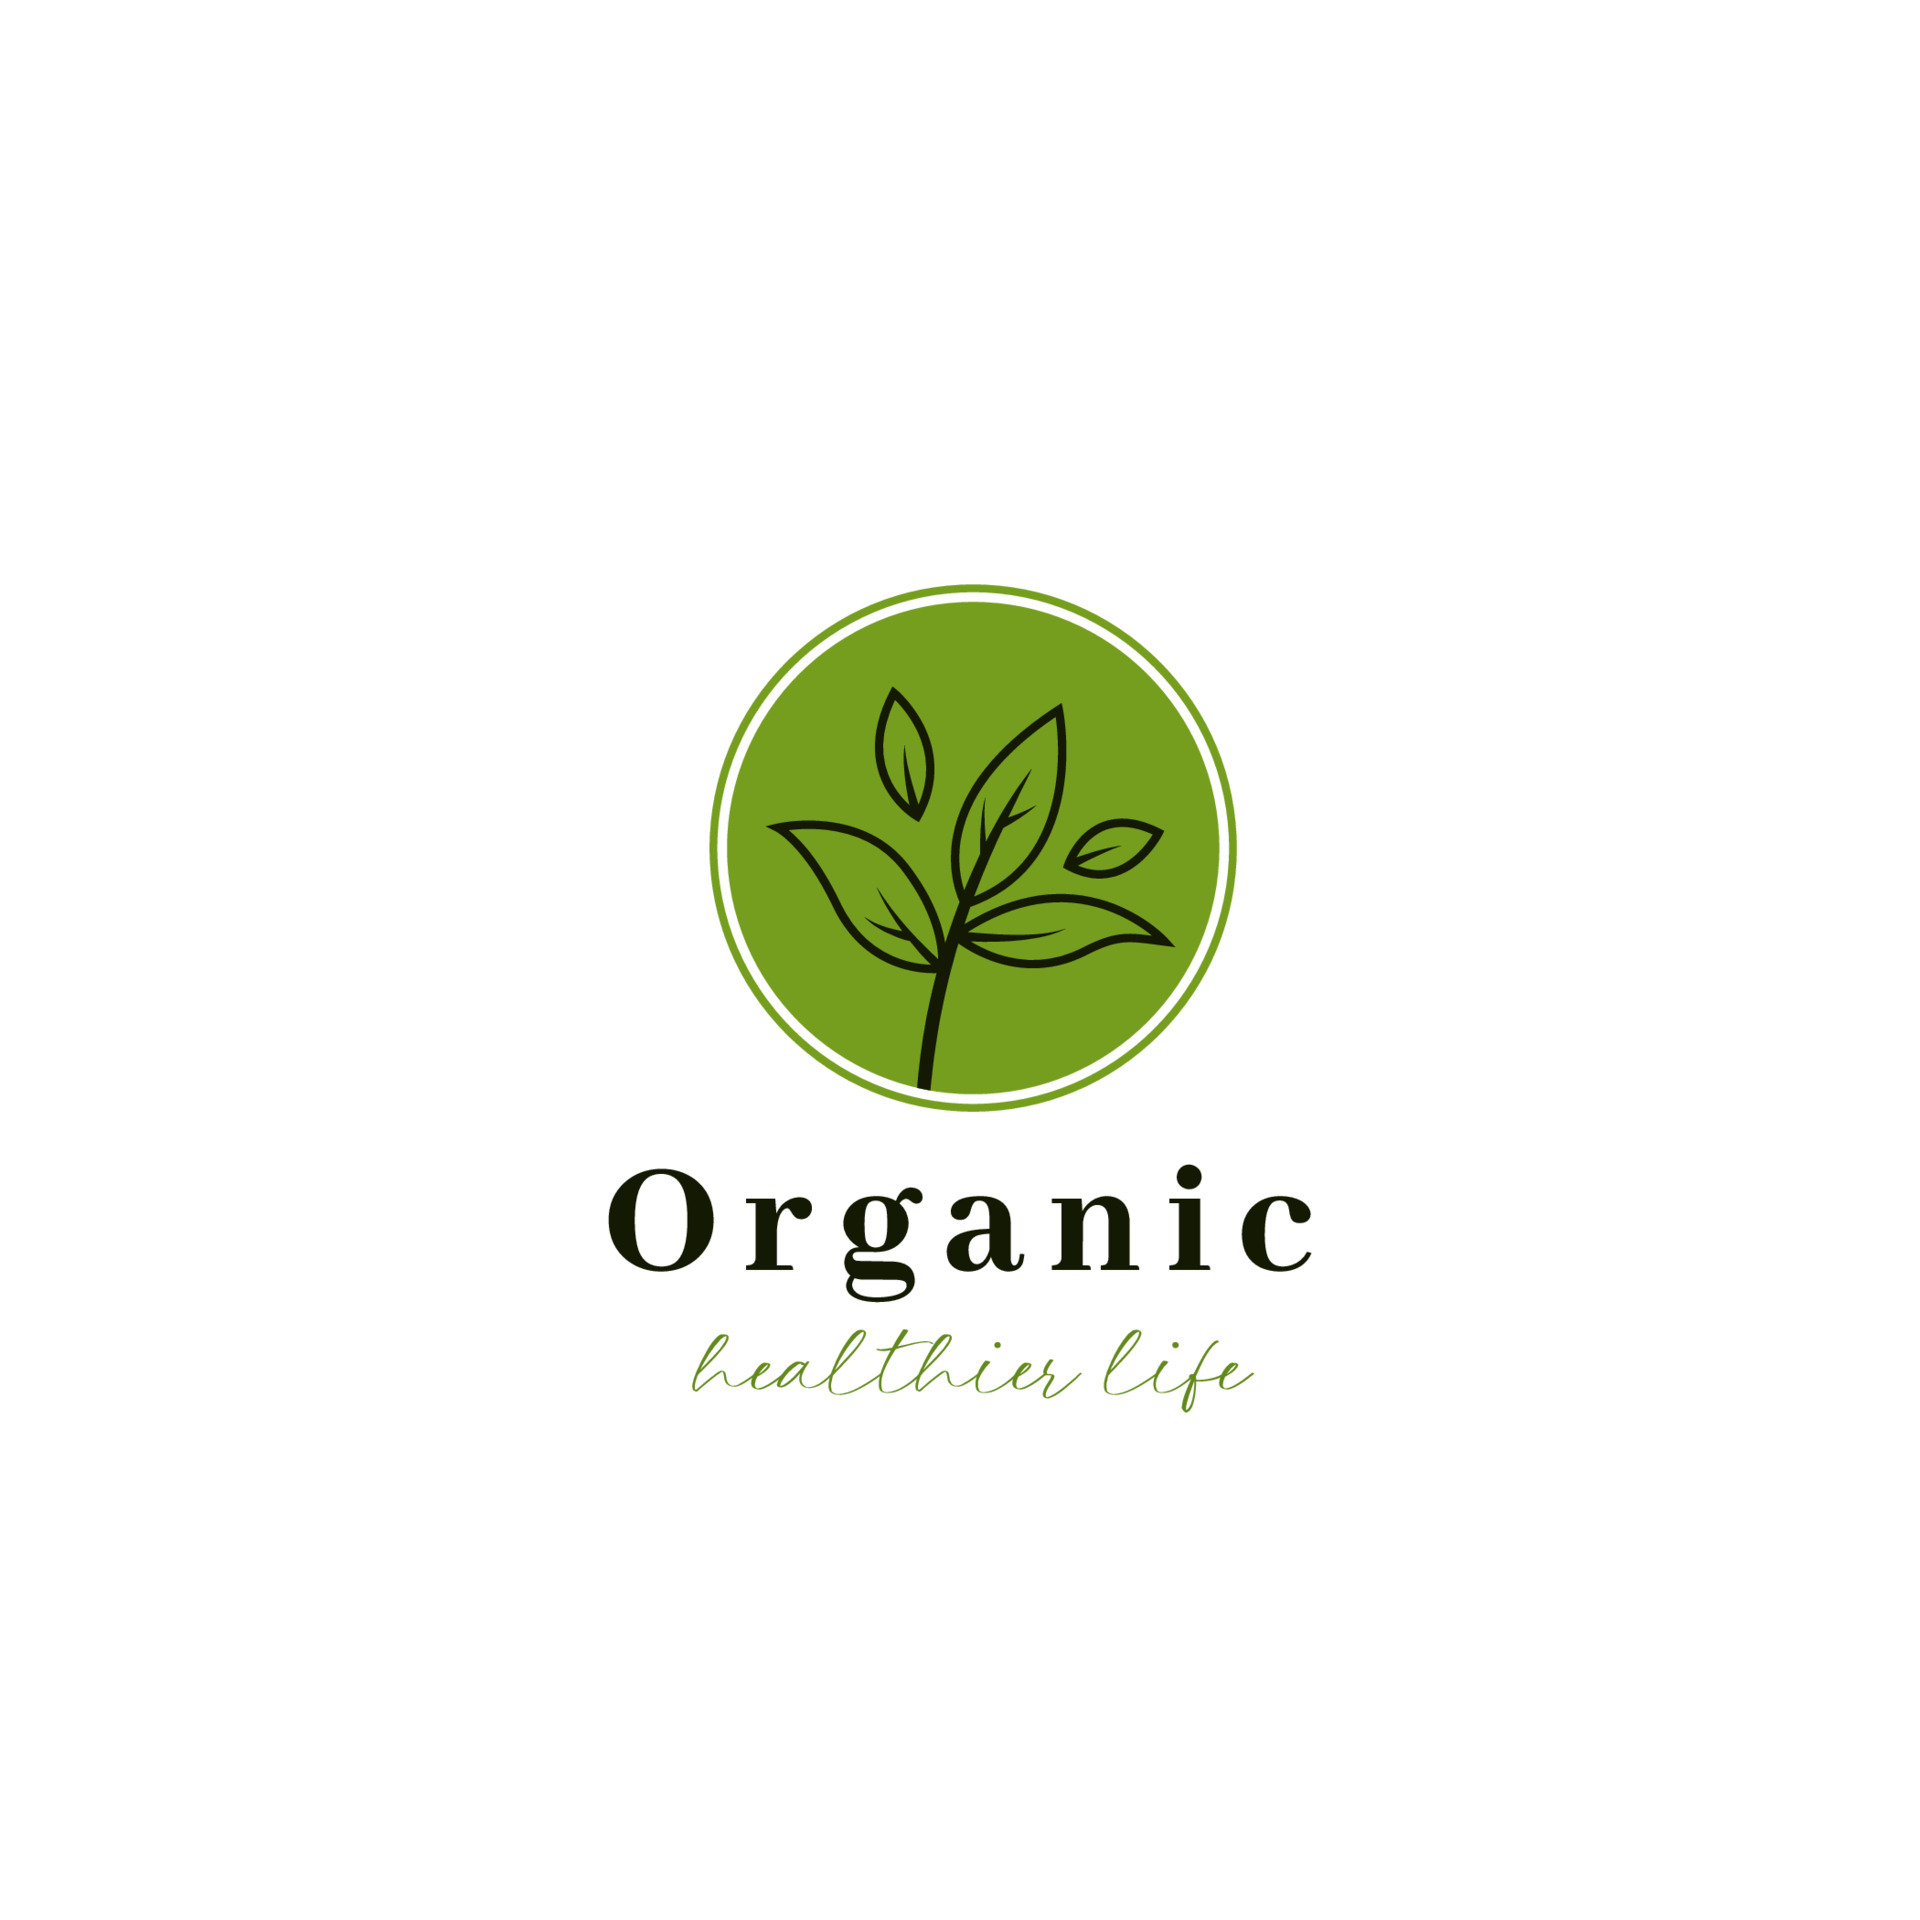 Organic herbal leaf tea logo icon in simple shoots illustration 4969913 ...